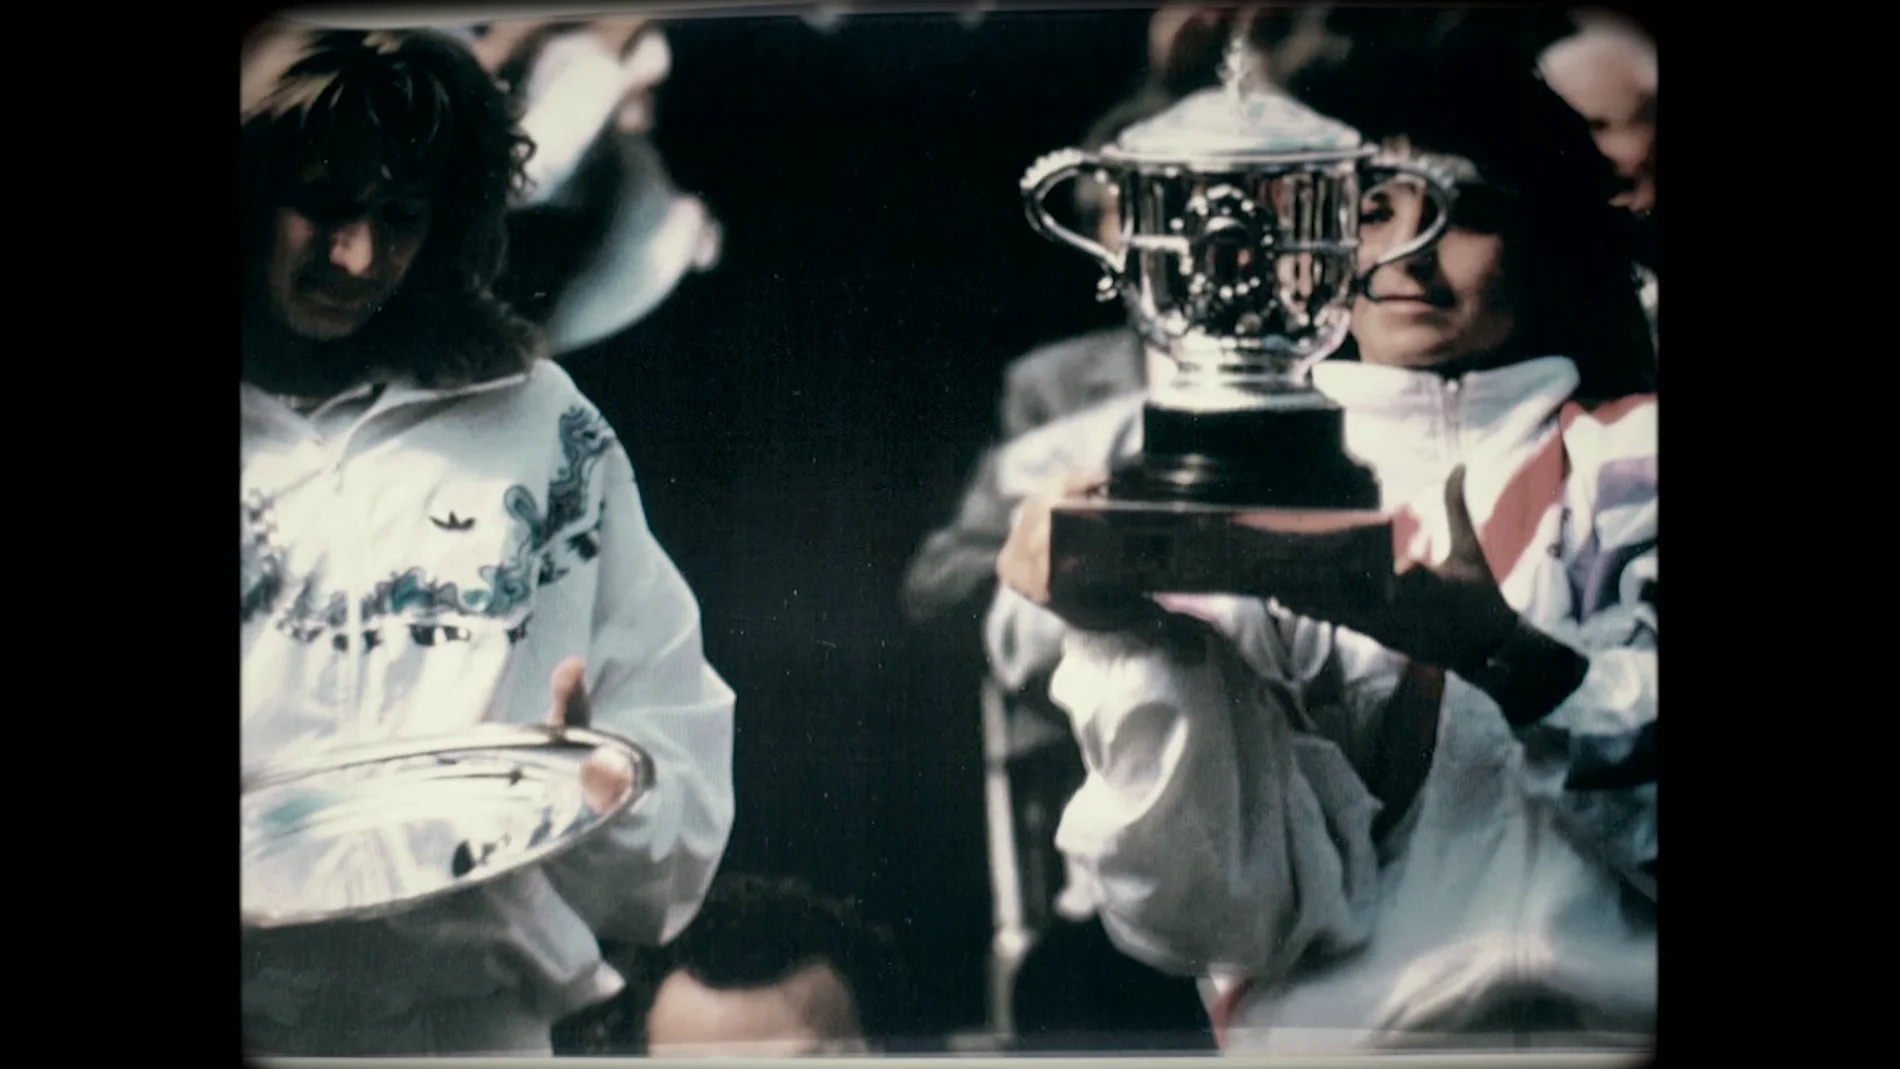 Arantxa Sánchez-Vicario gana un Grand Slam en 1989